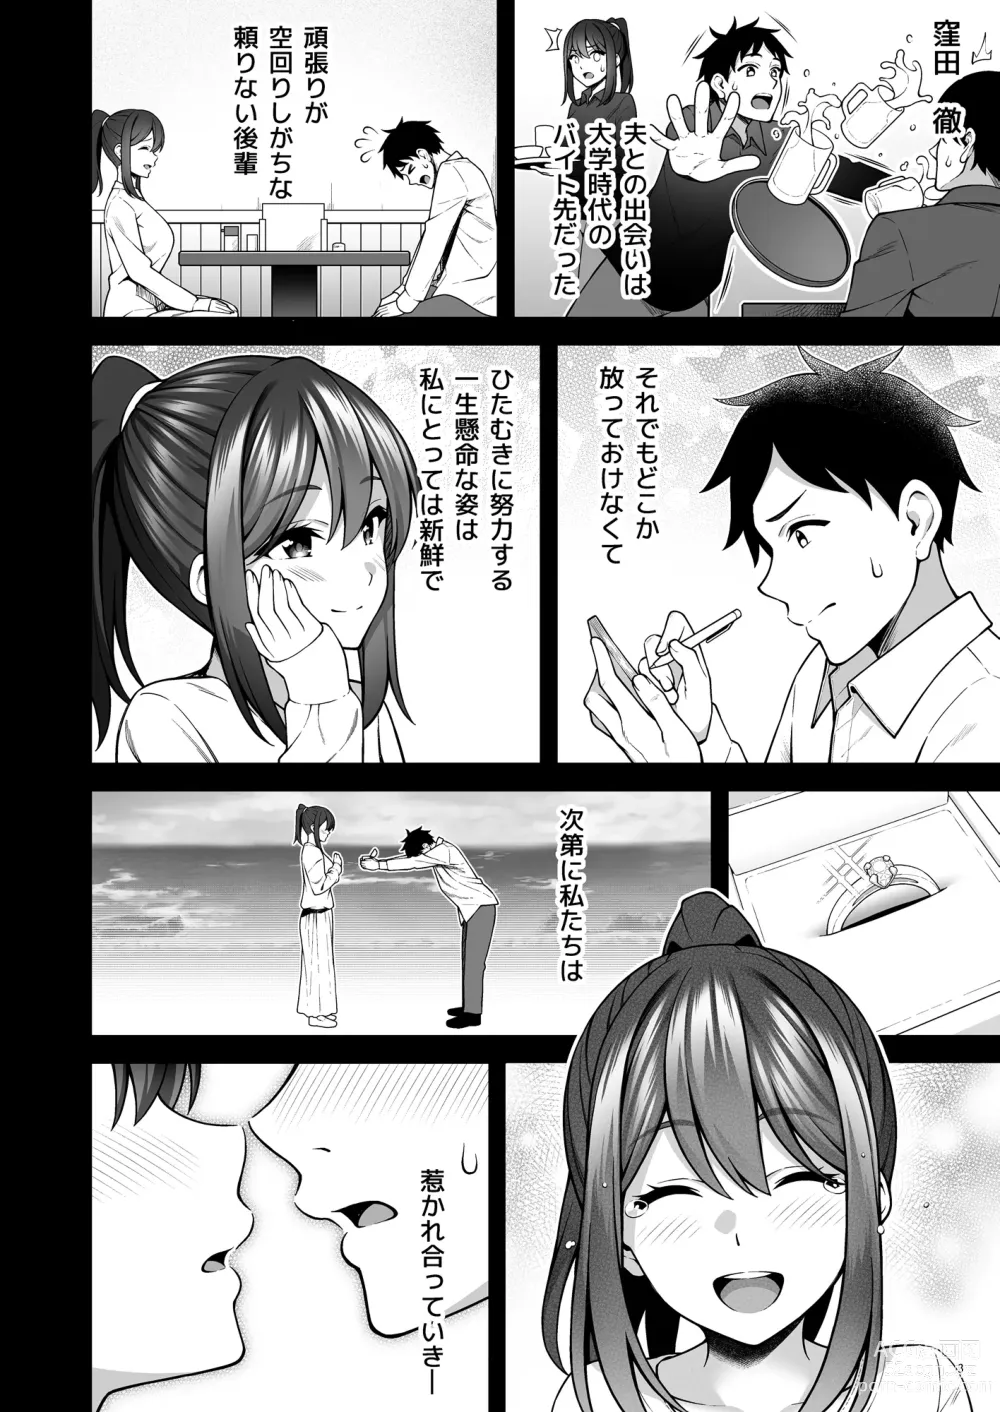 Page 4 of doujinshi 例え人妻になっても、躾けられた身体は快楽を忘れられない。